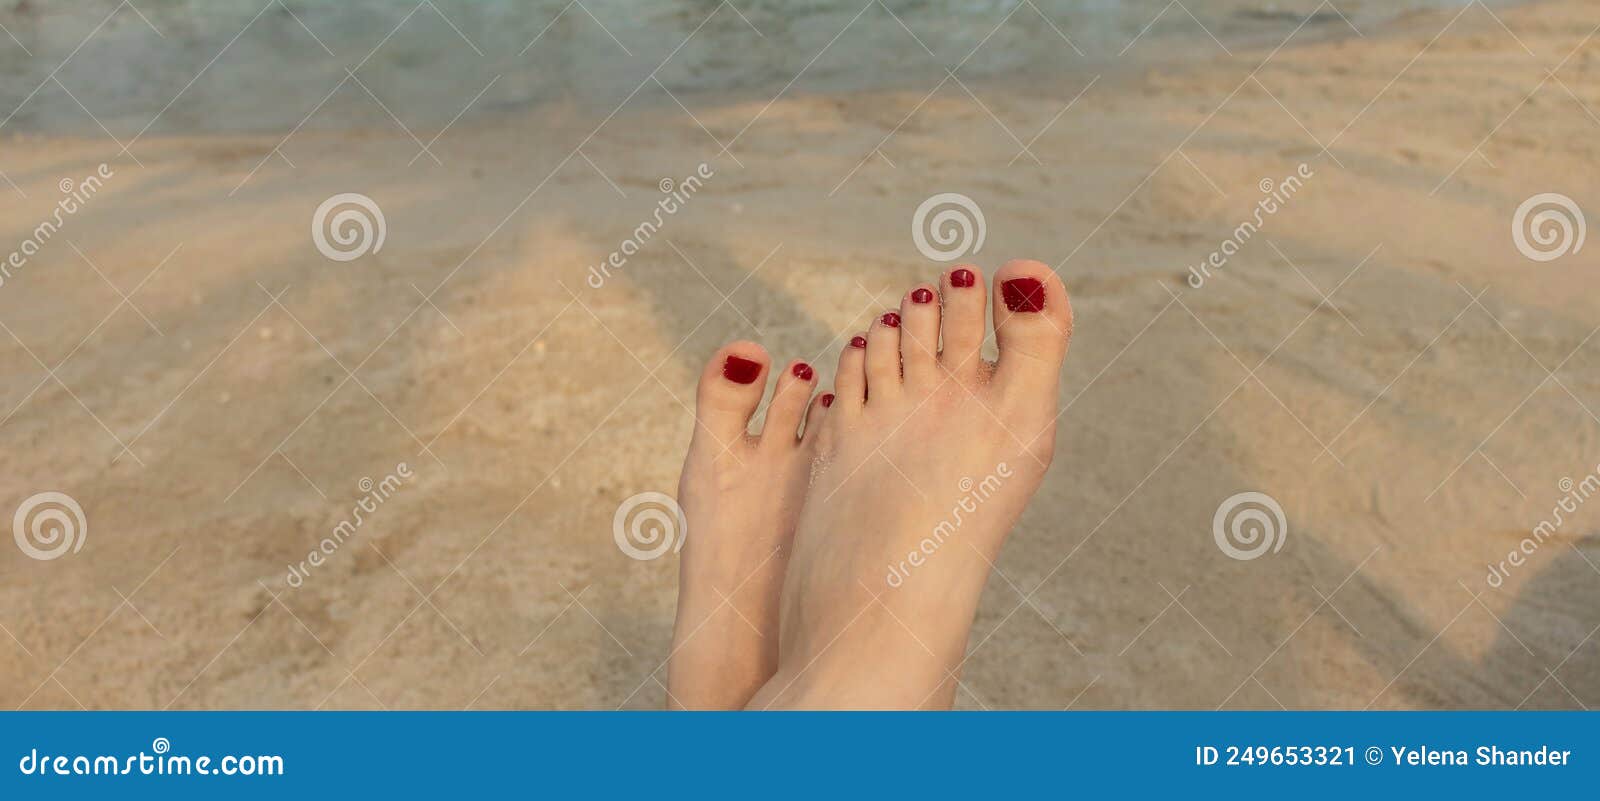 444 Female Feet Red Pedicure Beach Sand Stock Photos